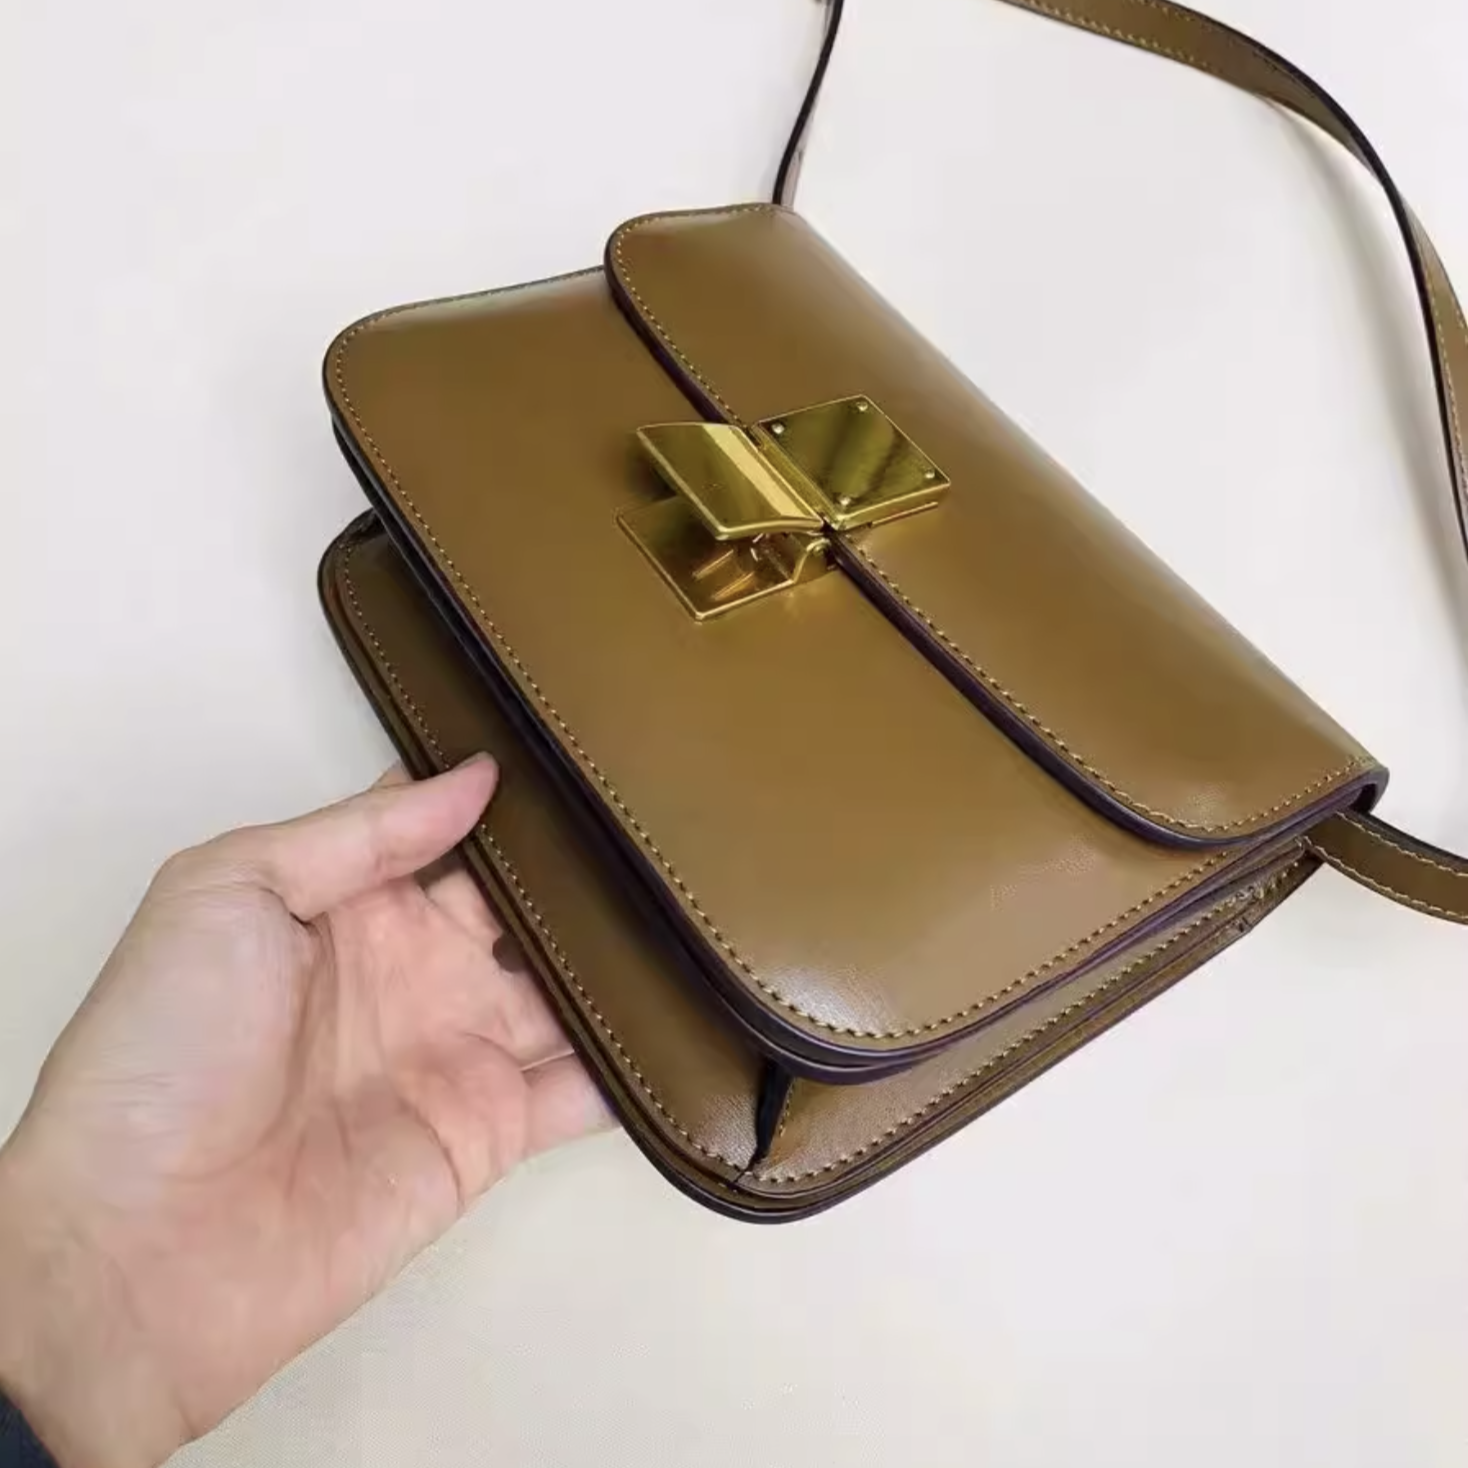 Celine-style Classic Box Bag